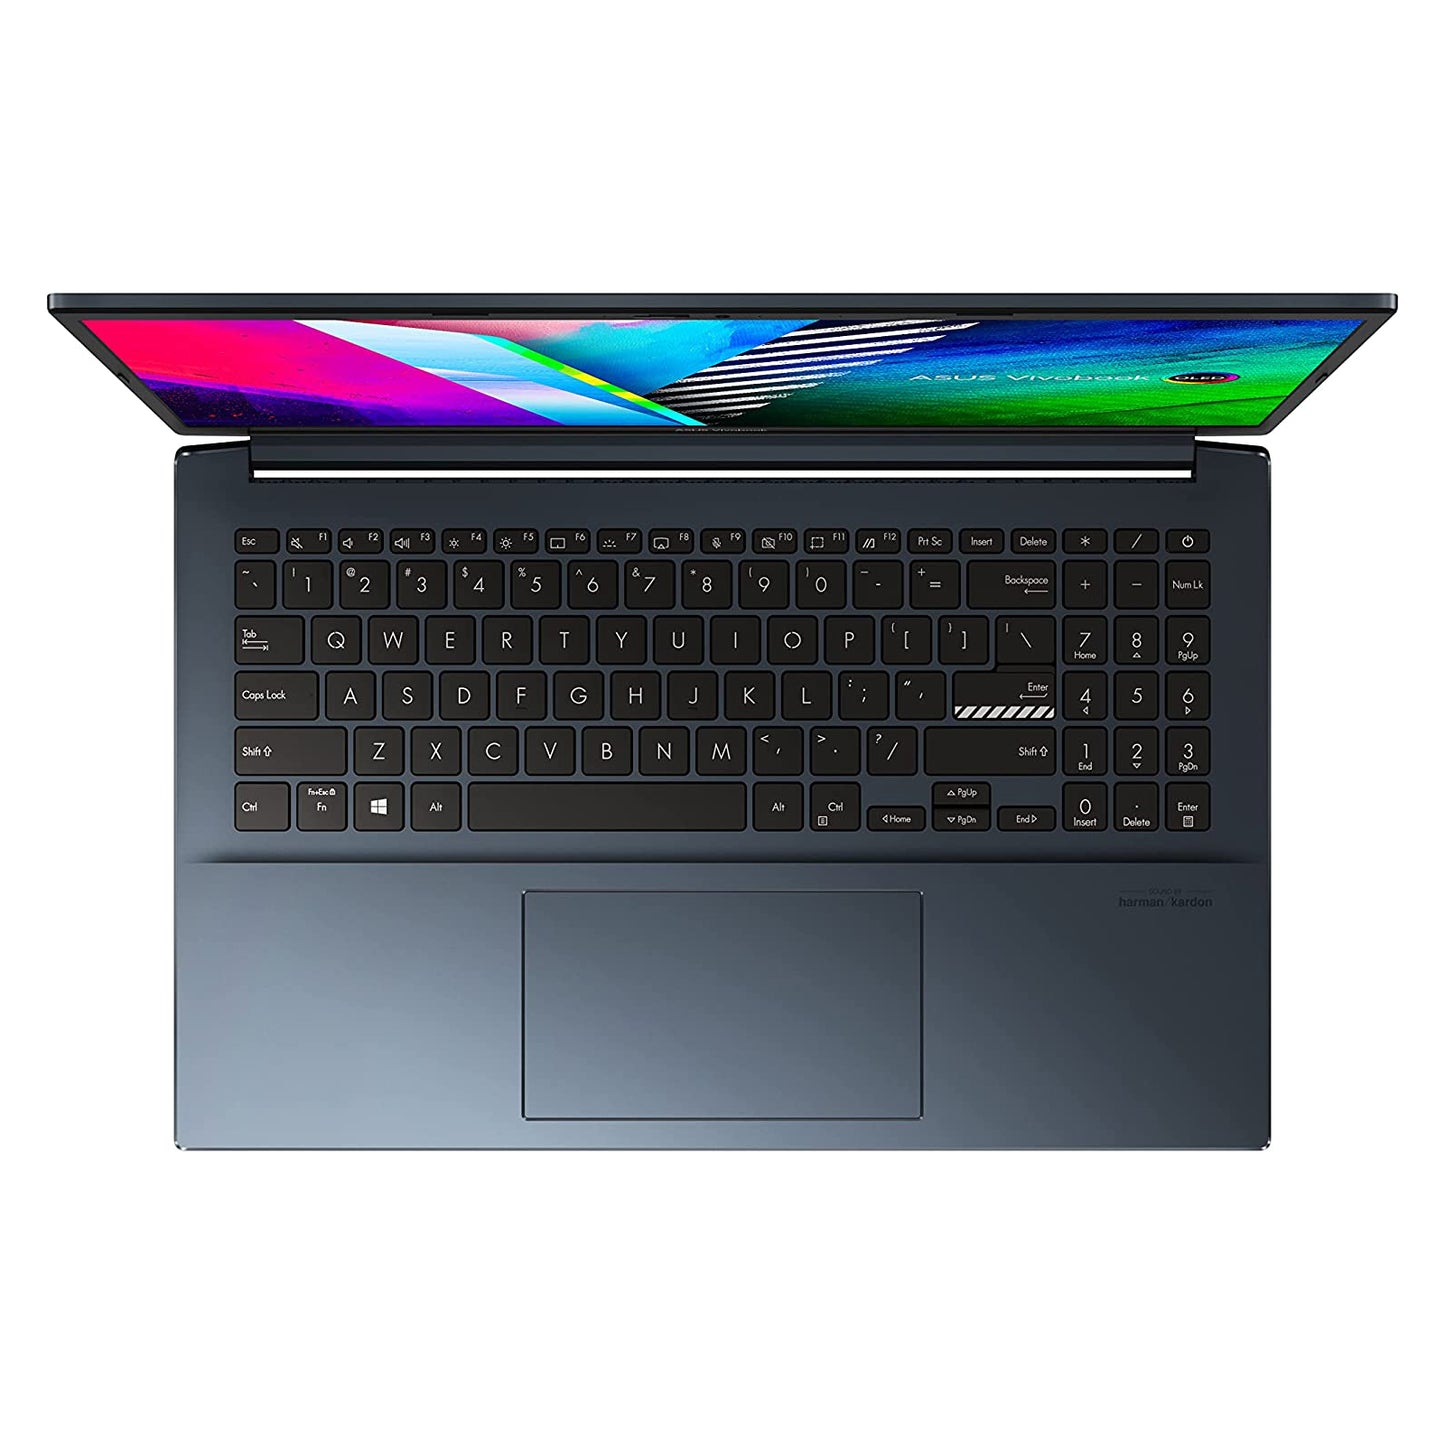 Asus VivoBook Pro Oled Rtx 3050 15.6" Laptop Offers (New OB)